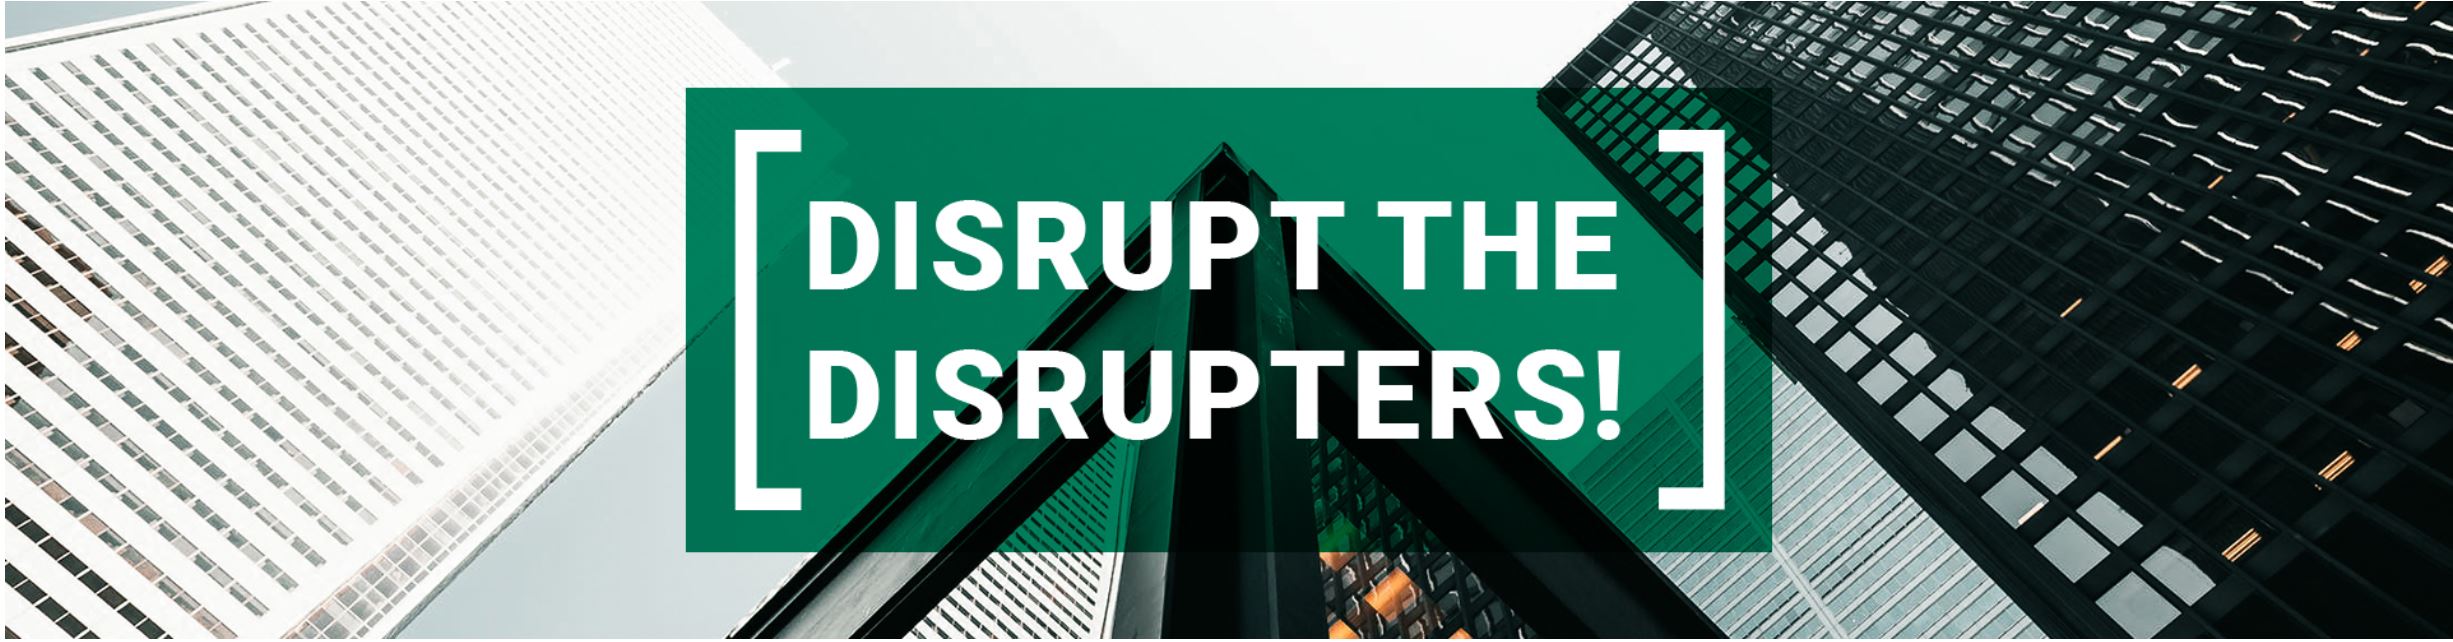 Das Motto von BIMsystems: Disrupt the Disrupters